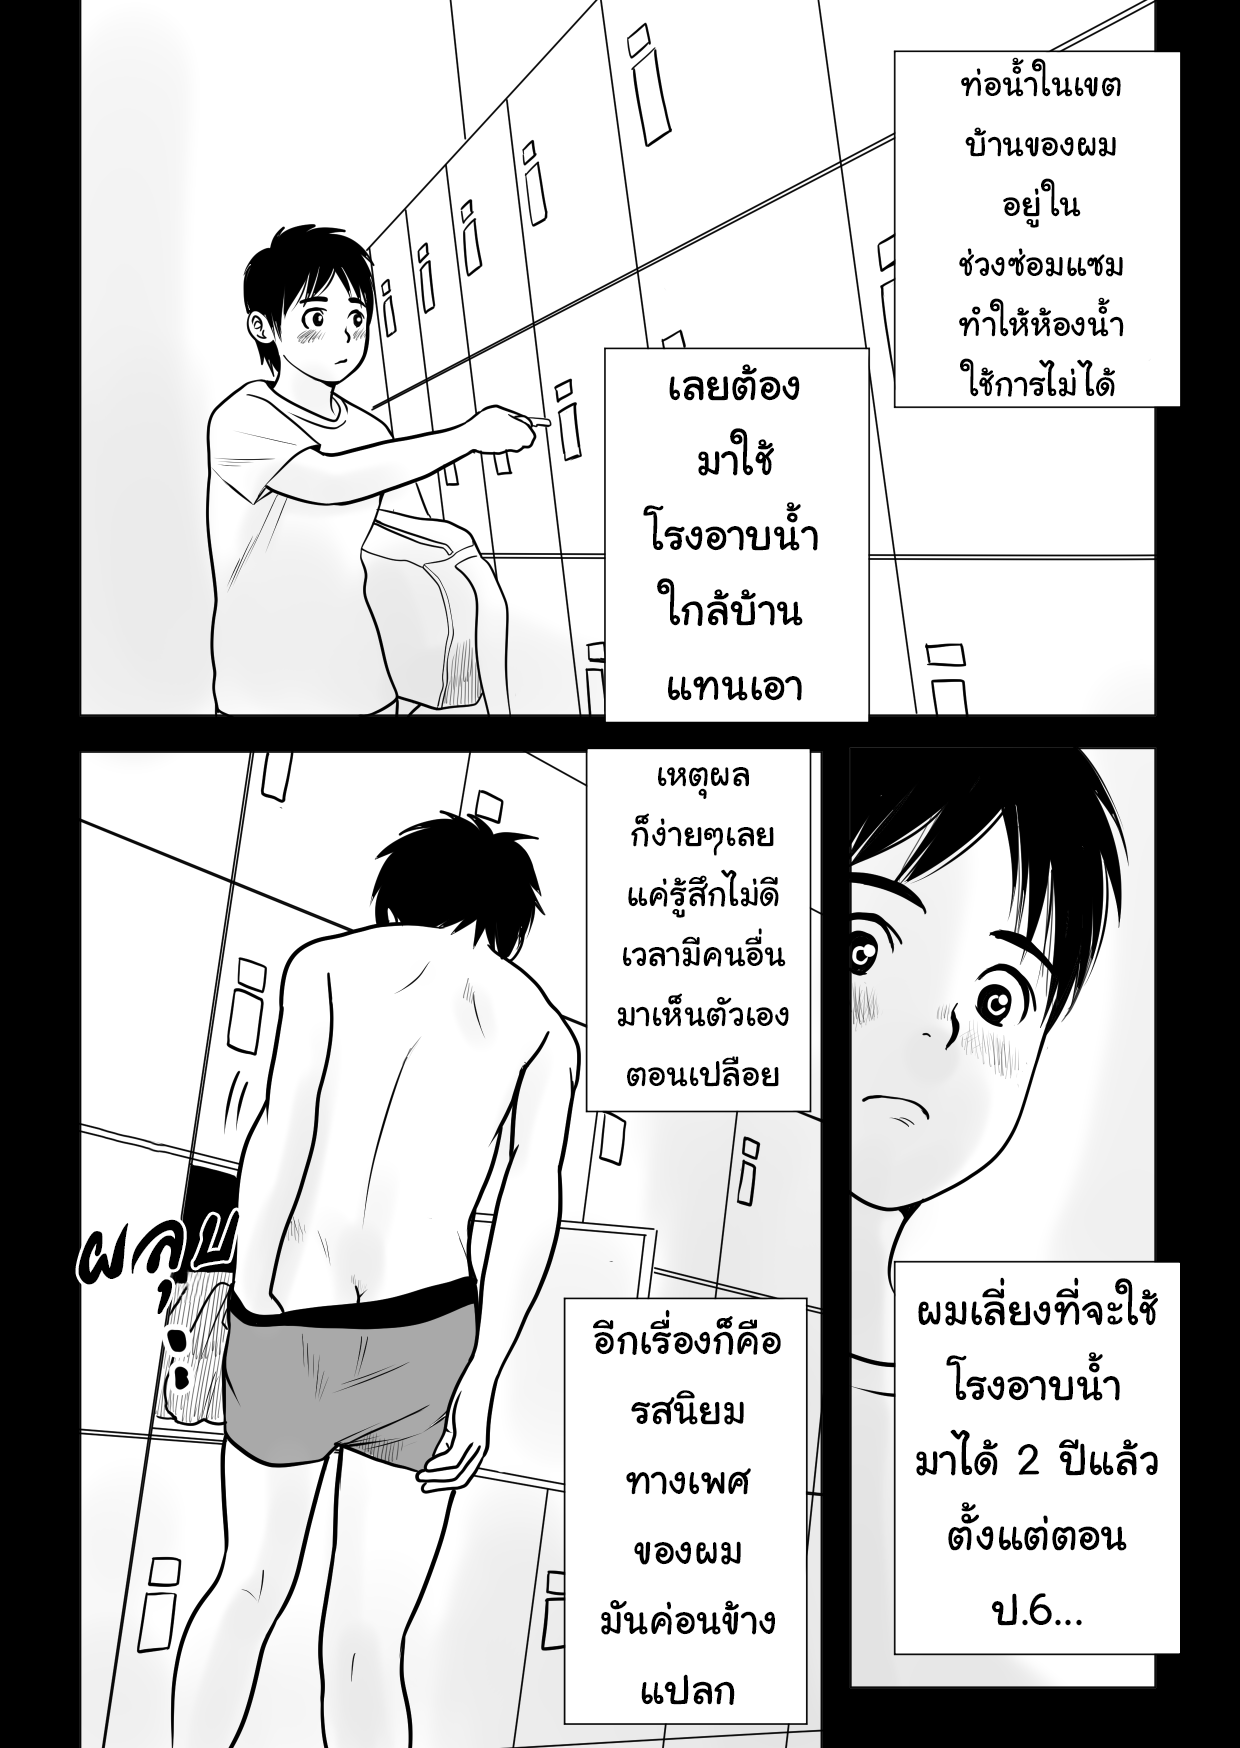 Doronko เพศศึกษาในโรงอาบน้ำ (2)